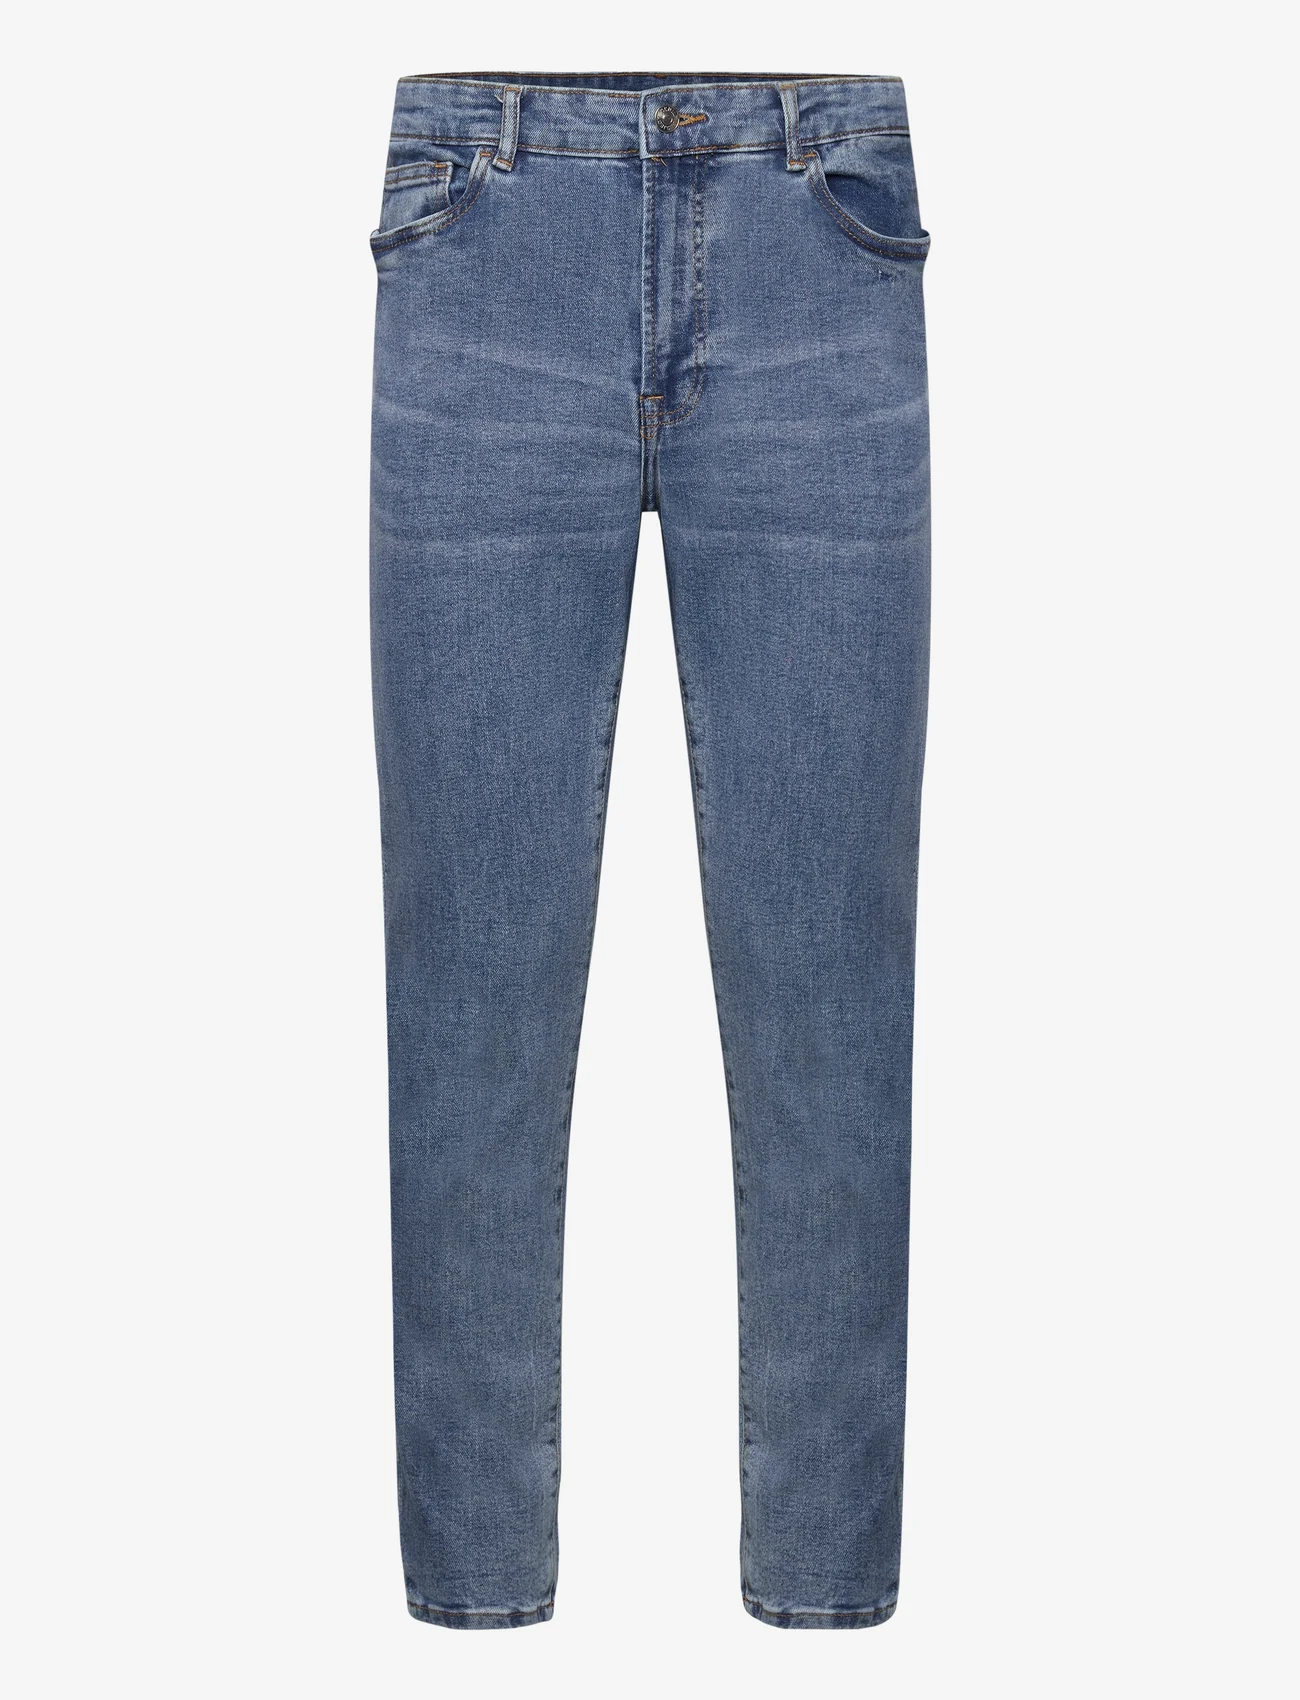 Denim project - DPRecycled Loose Jeans - brīva piegriezuma džinsa bikses - medium stone wash - 0